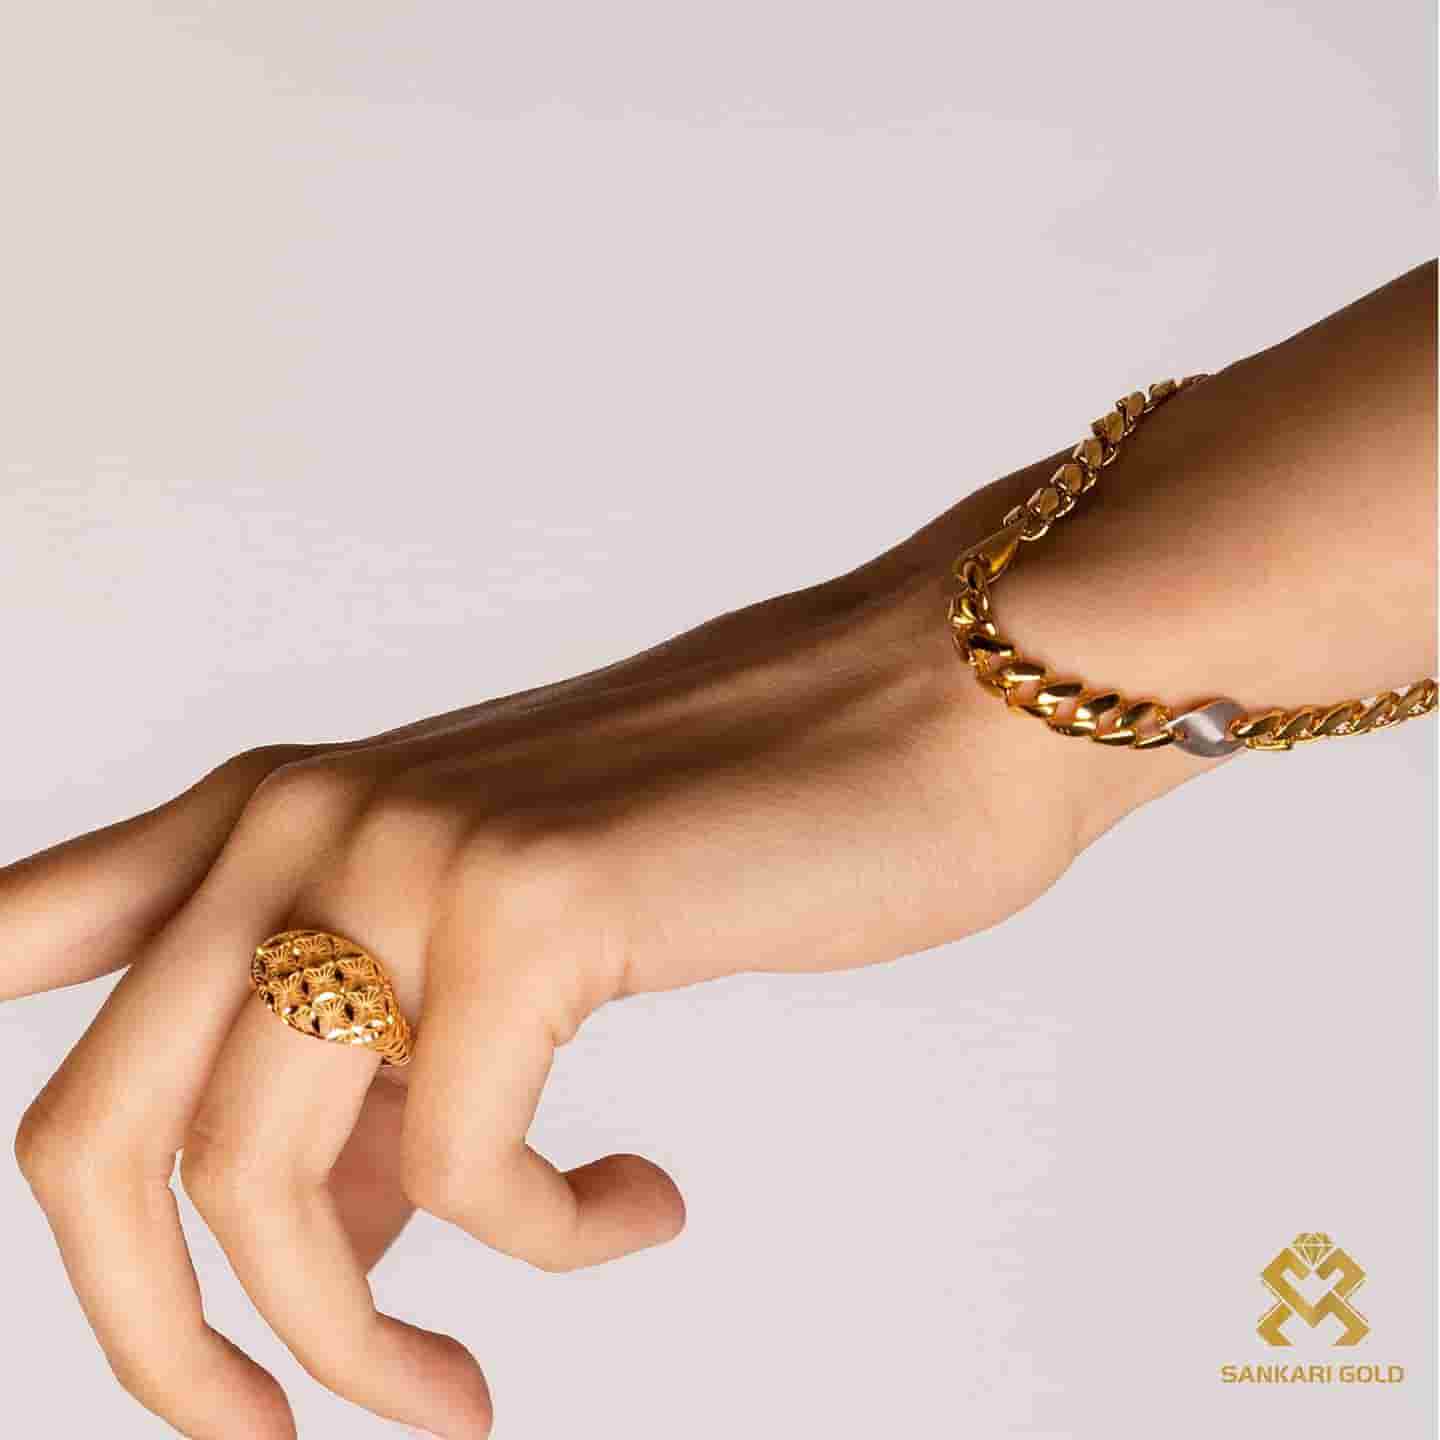 Sankari Gold - مجوهرات السنكري